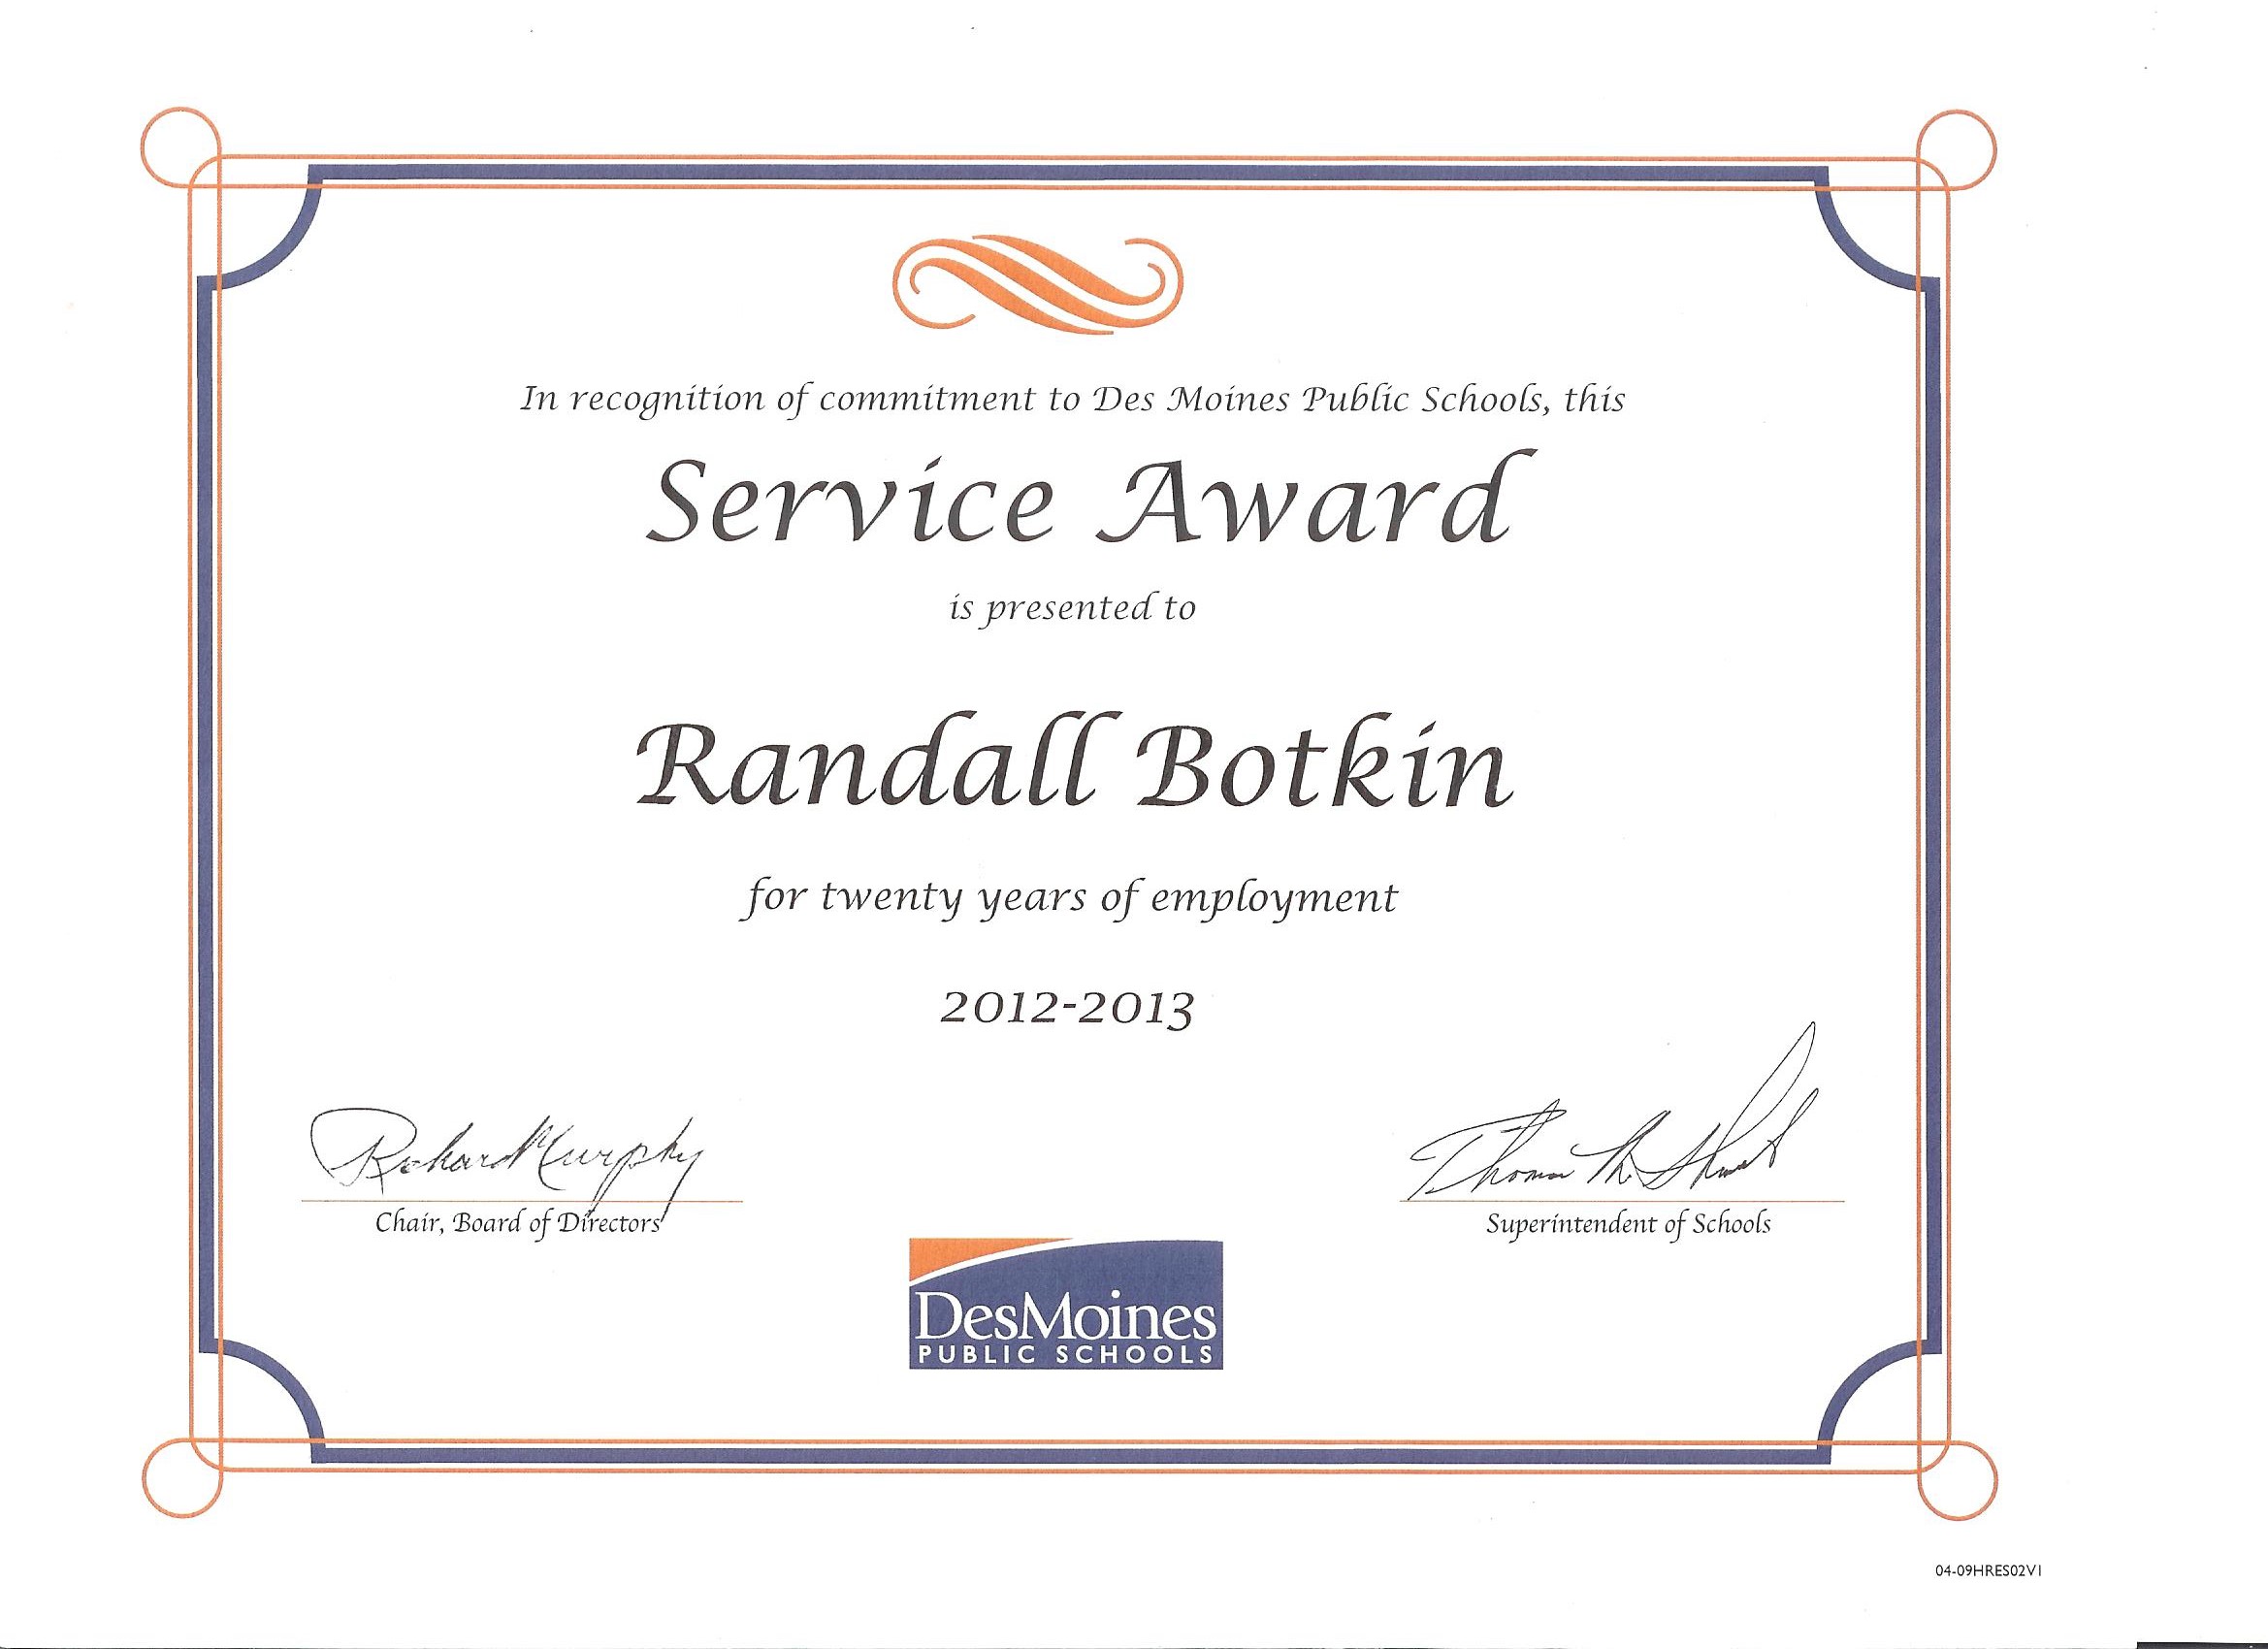 Randy Botkin DMPS Service Award